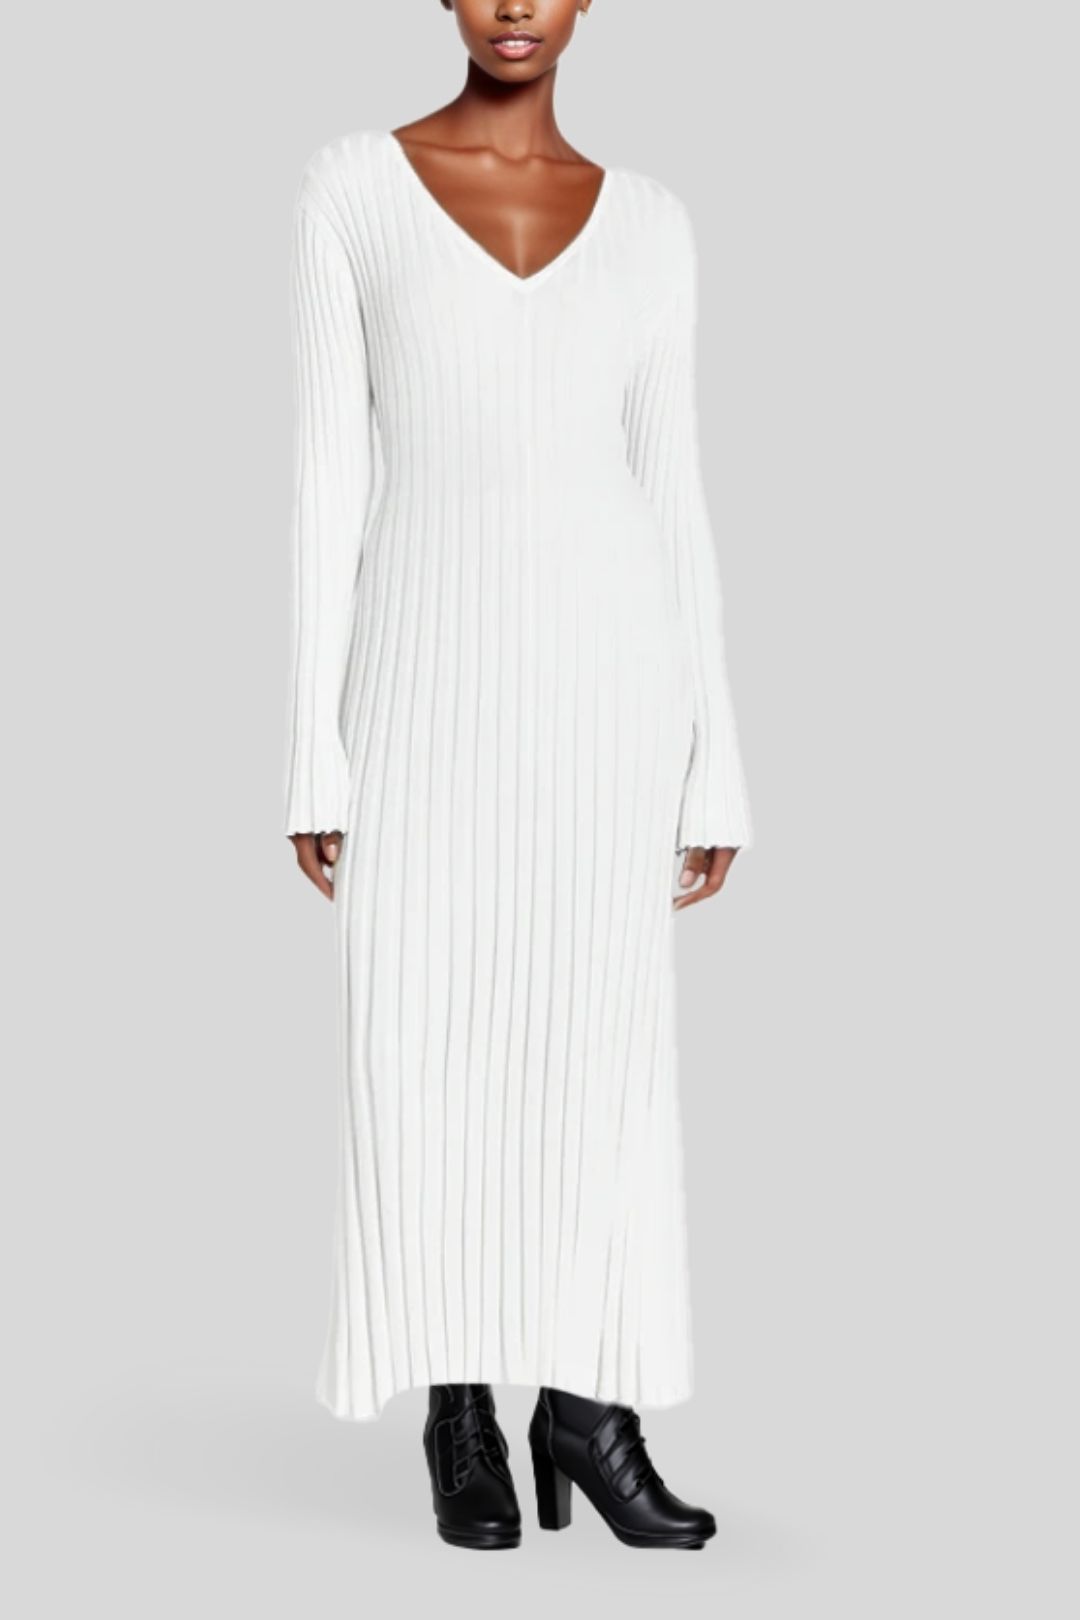 Dissh Reign Off White Sleeved Knit Midi Dress